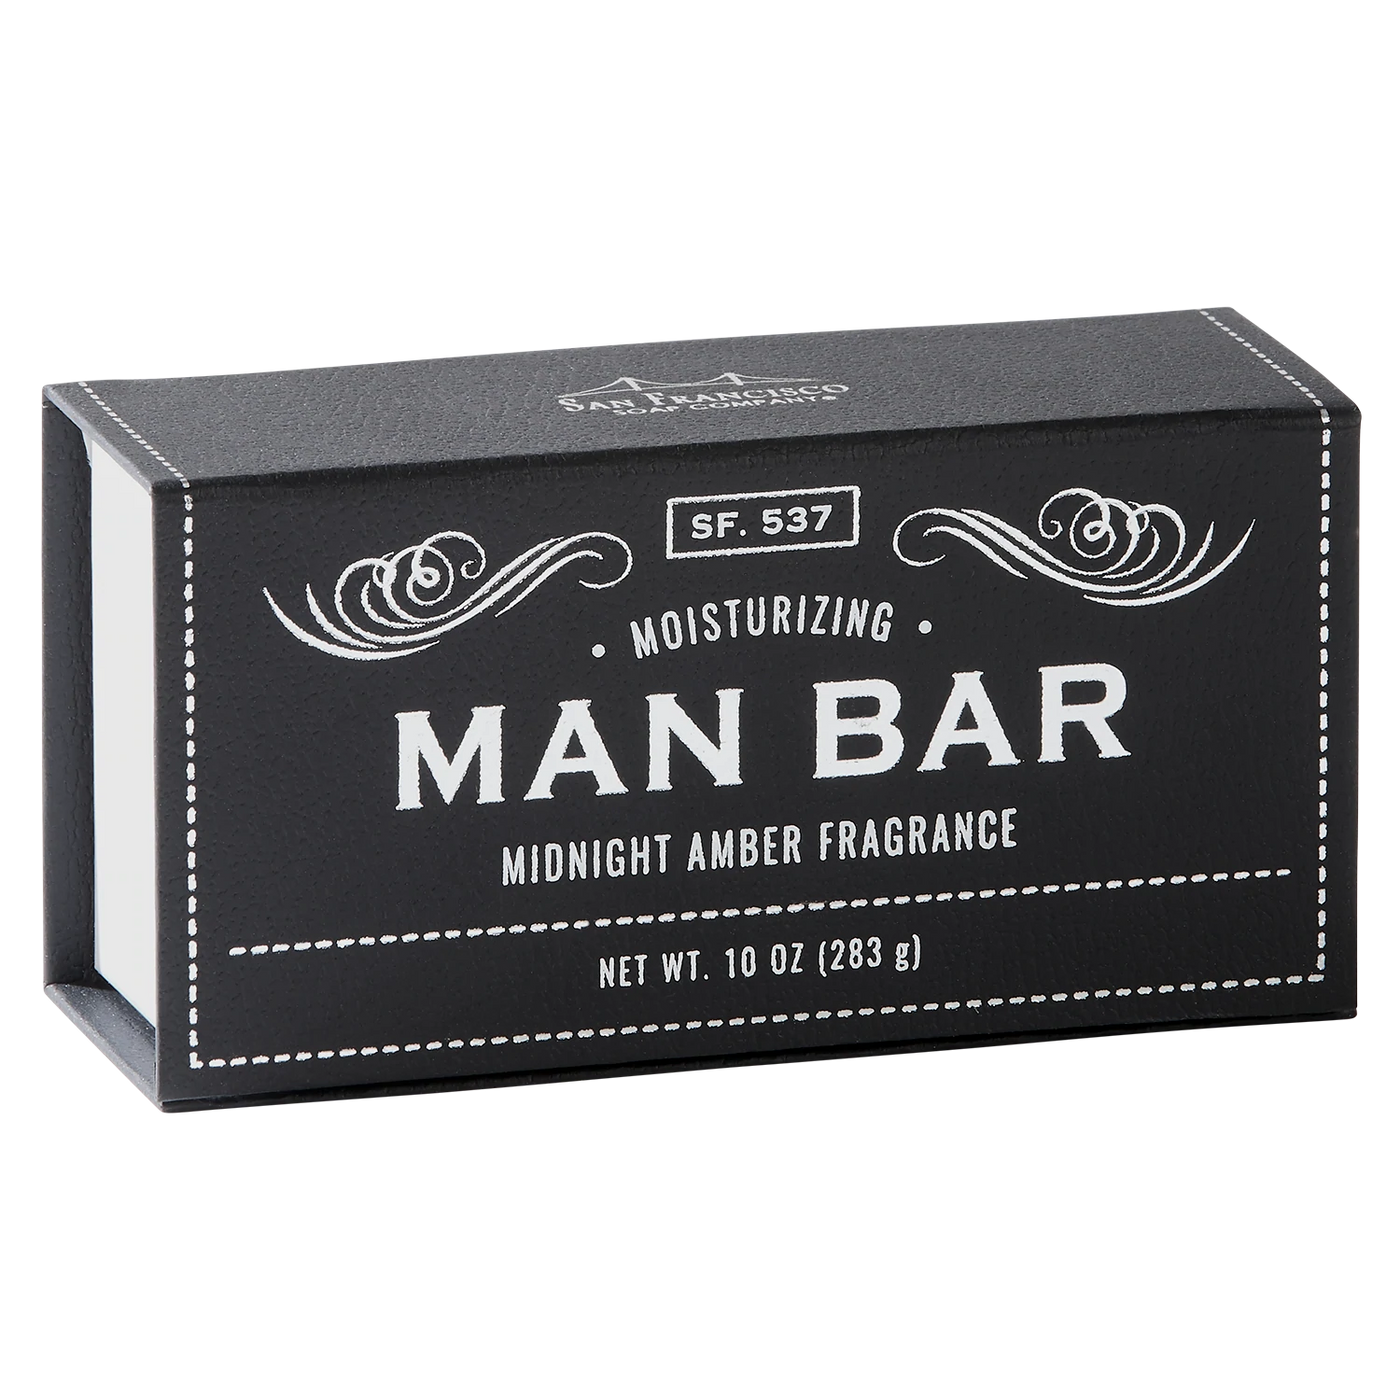 MAN BAR® - Moisturizing Midnight Amber